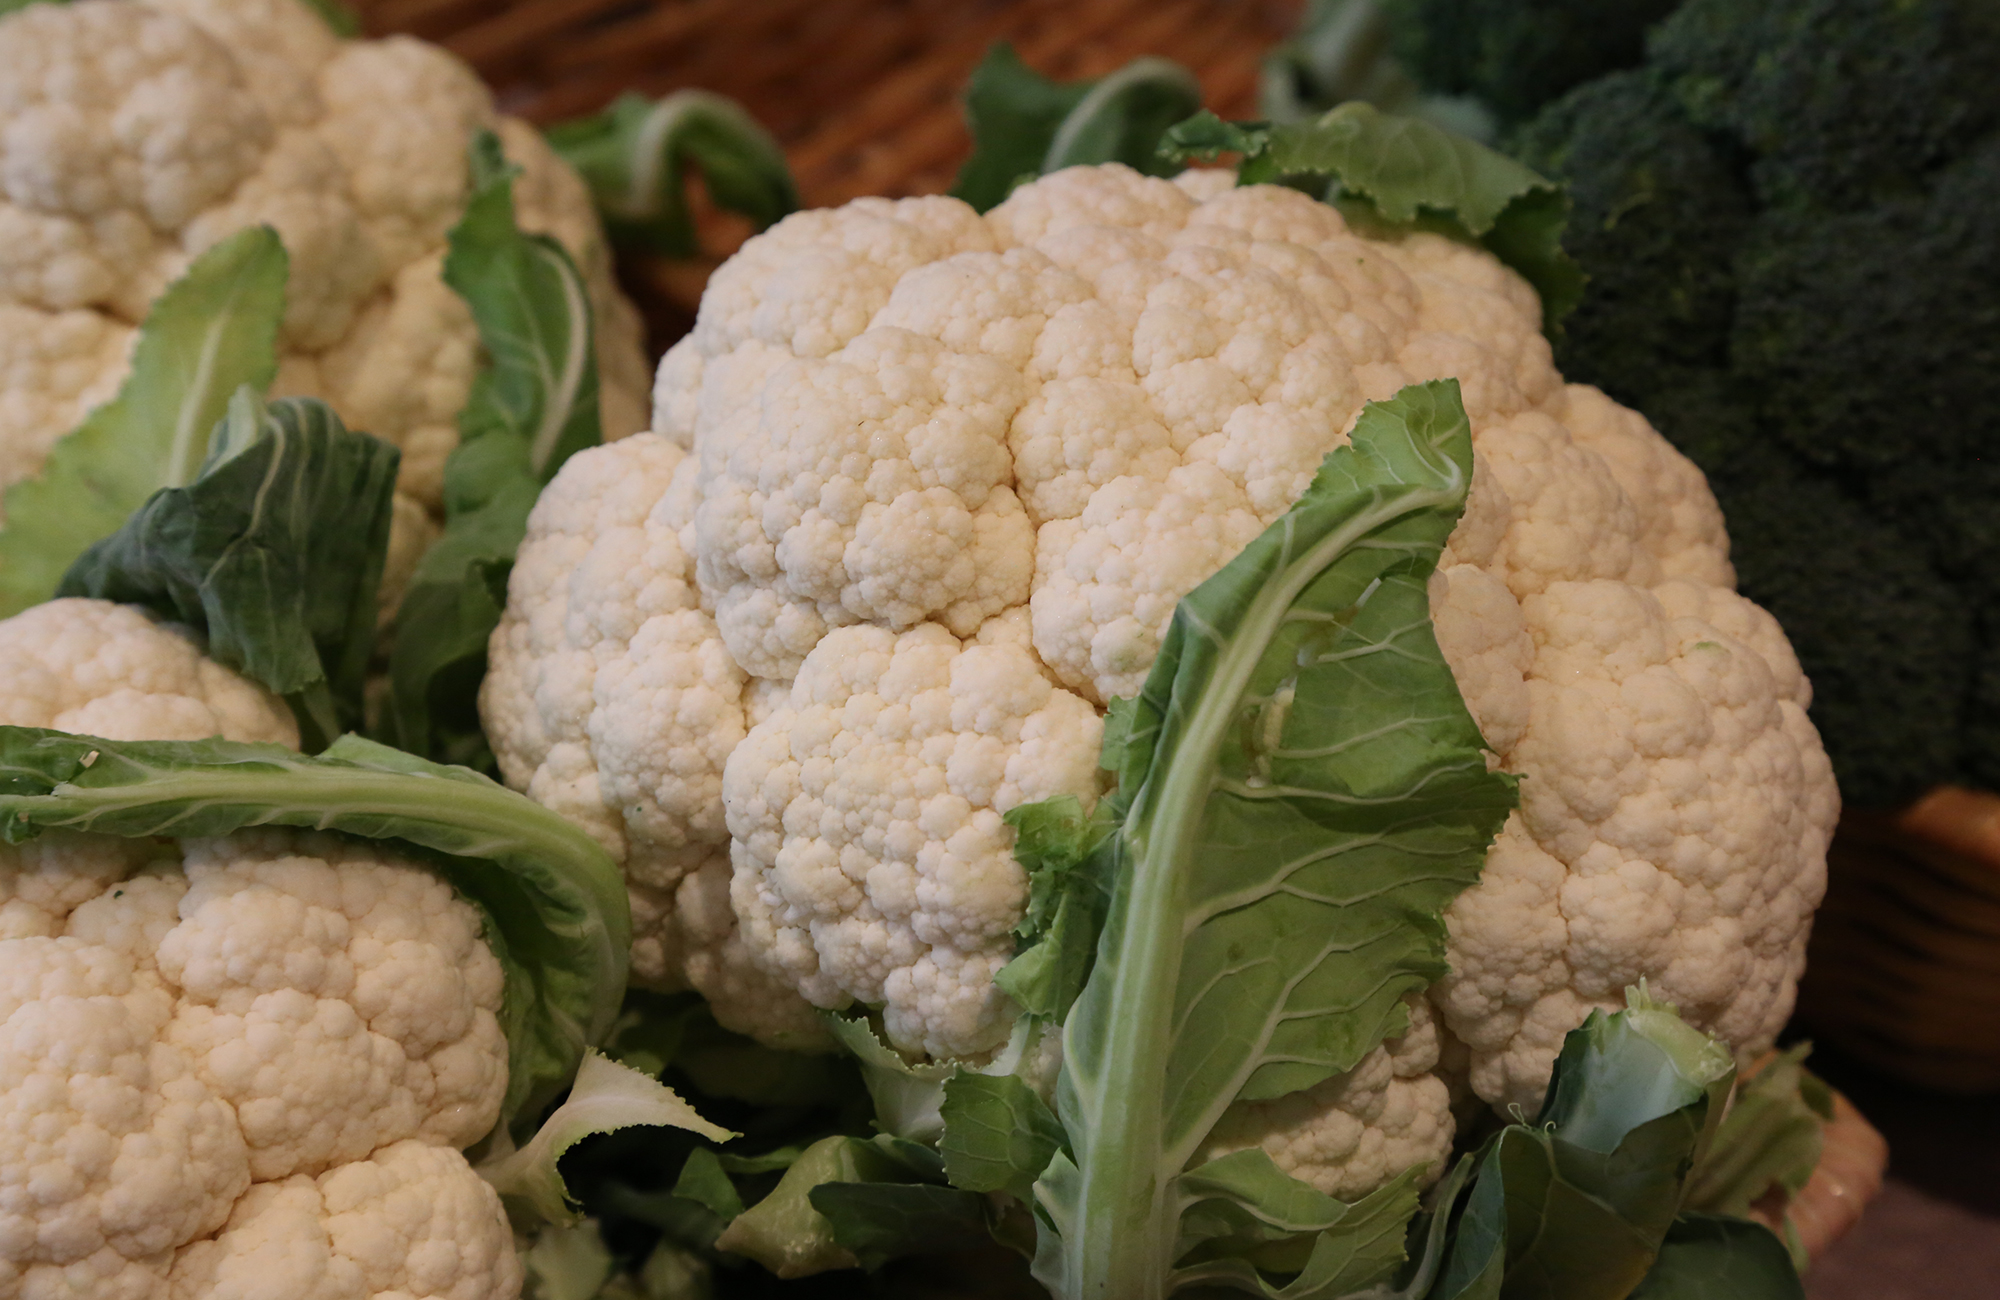 Picture of fresh cauliflower